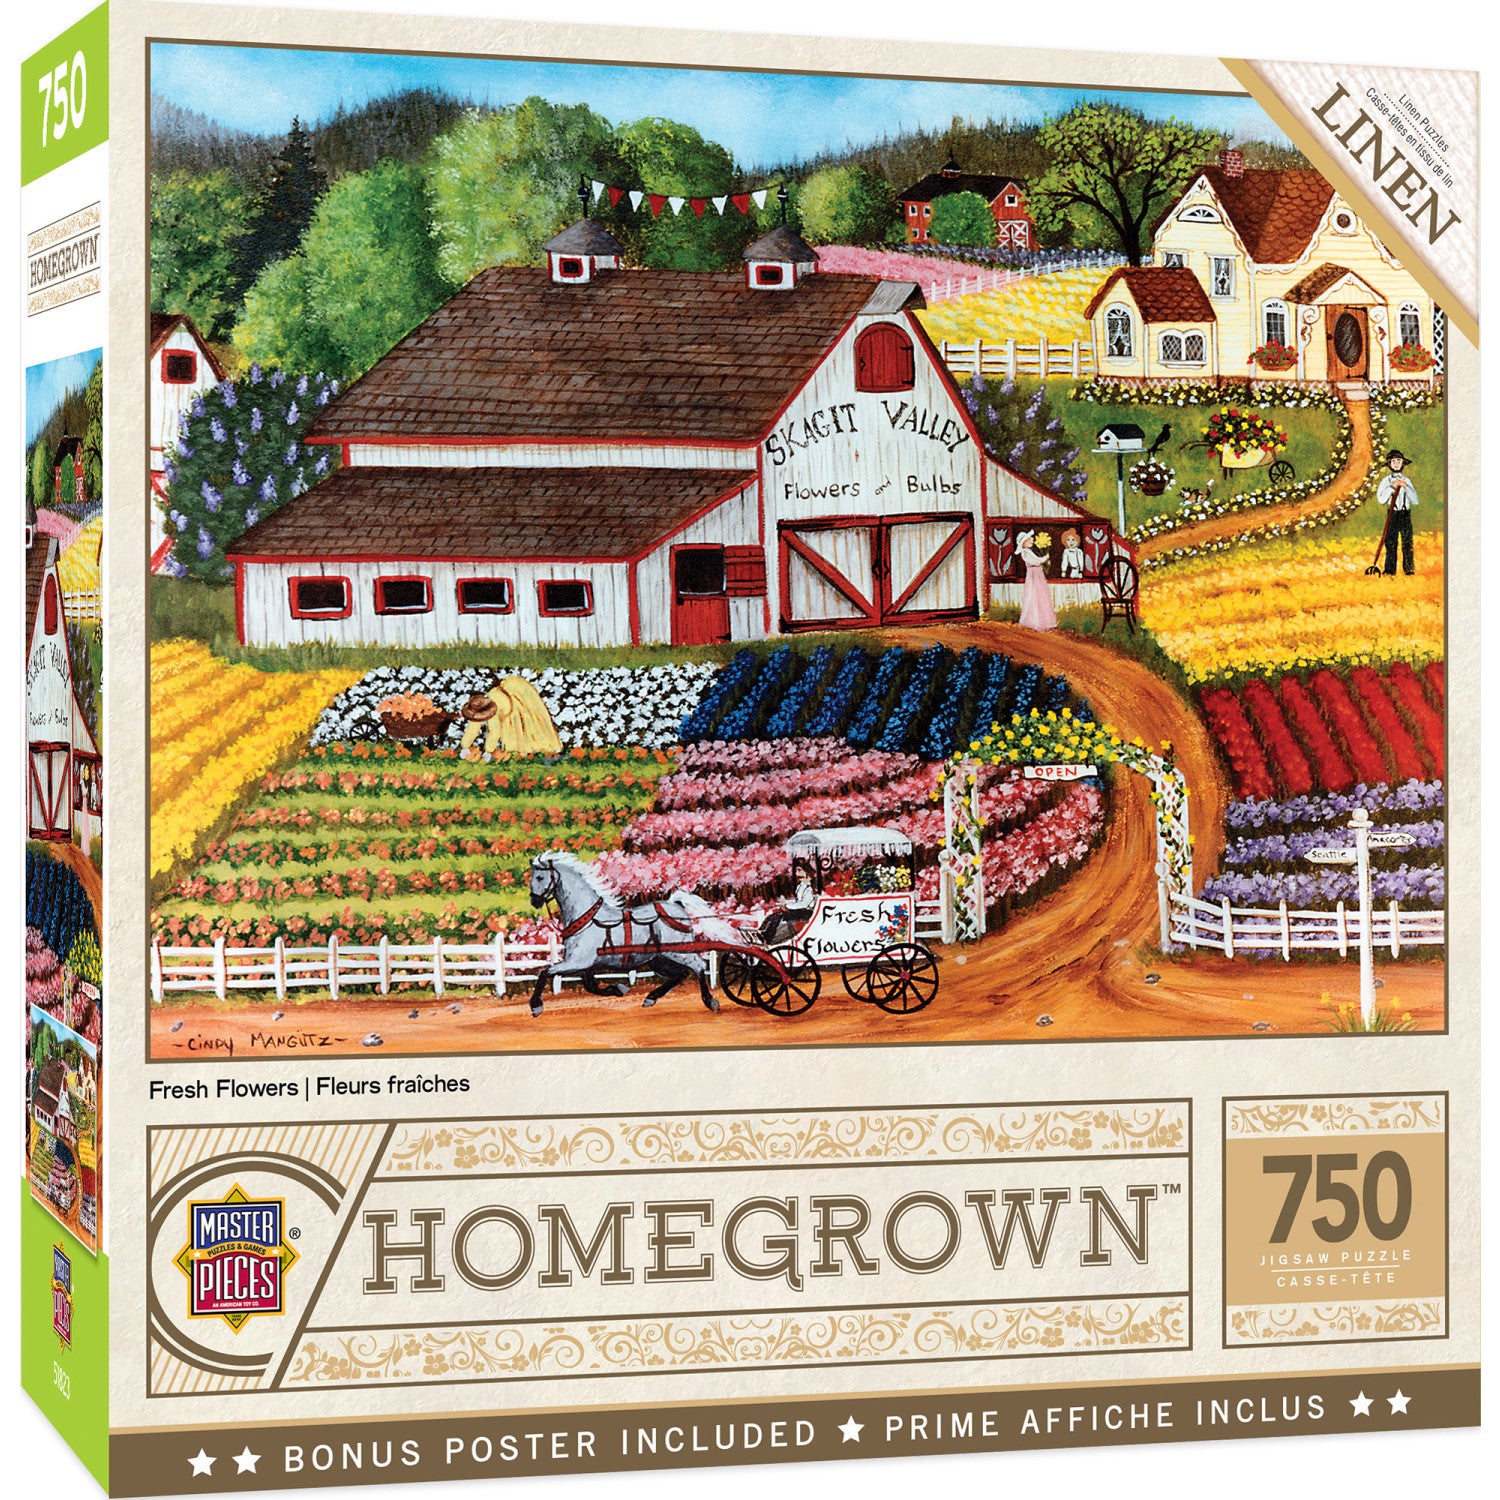 Homegrown - Fresh Flowers 750 Piece Jigsaw Puzzle